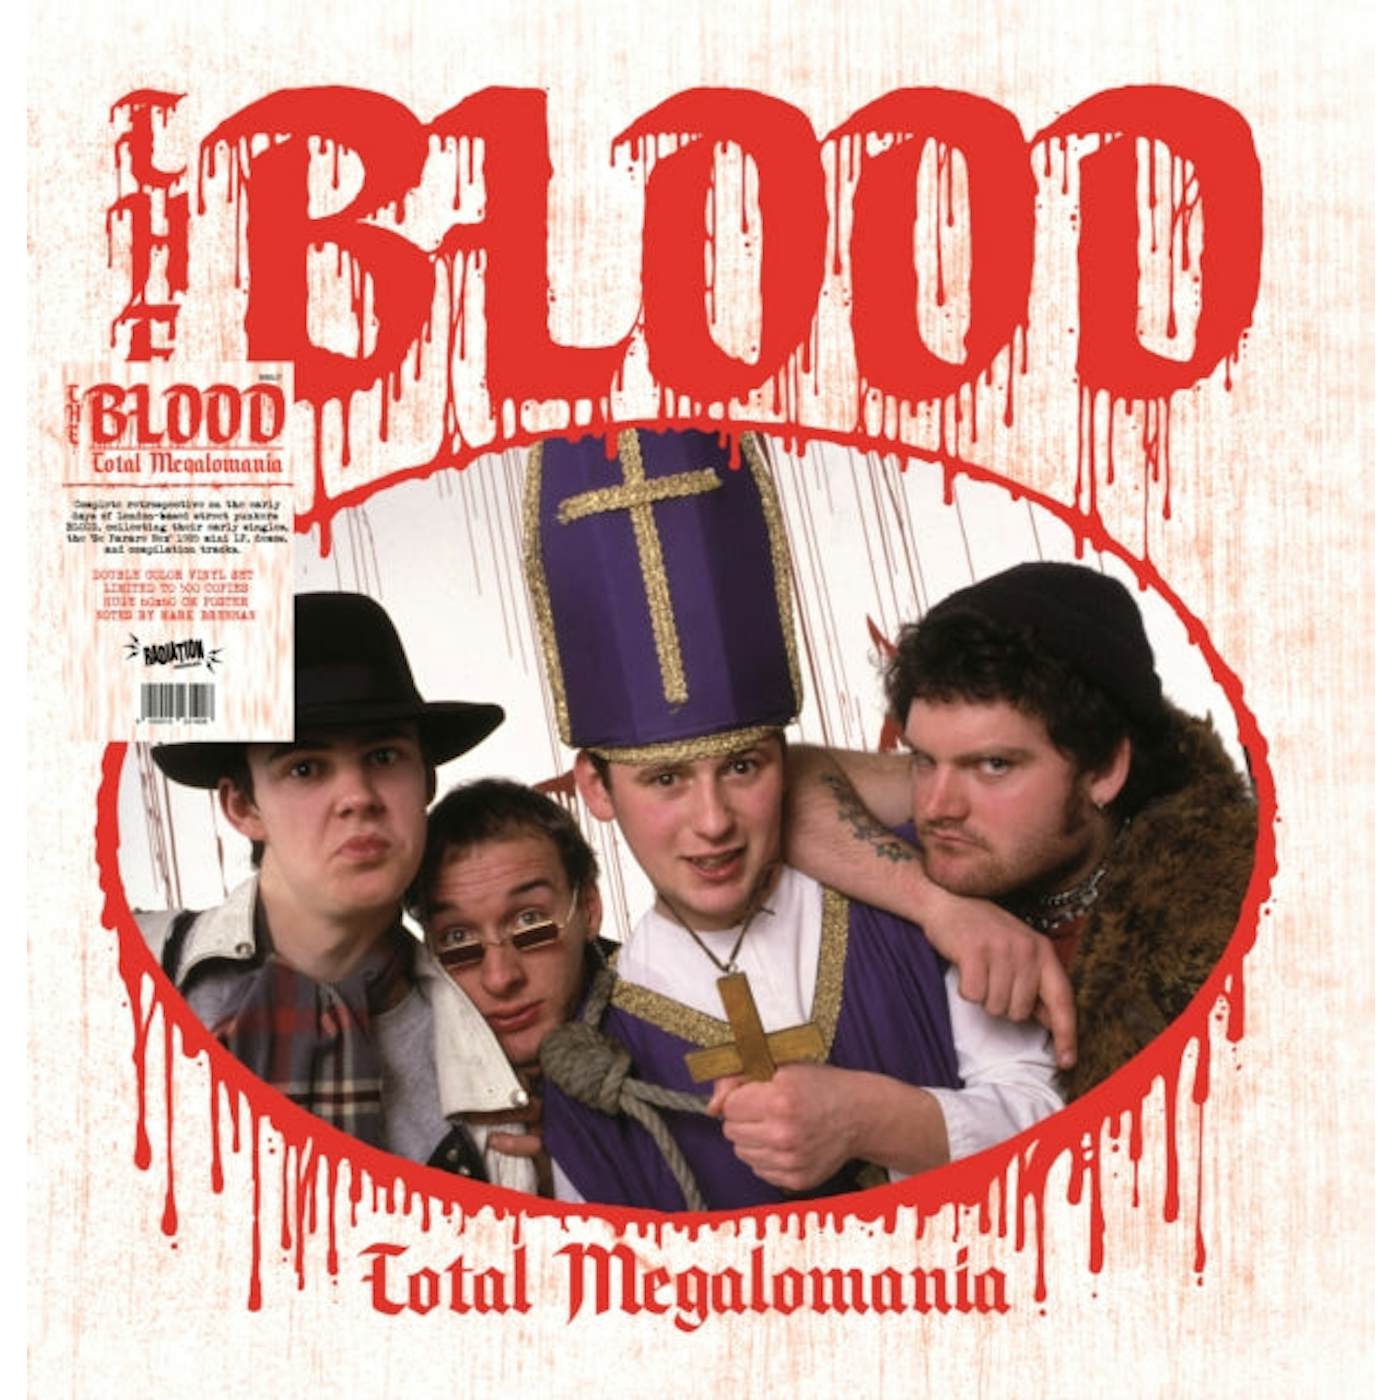 Blood LP Vinyl Record - Total Megalomania (Blue/White Vinyl)